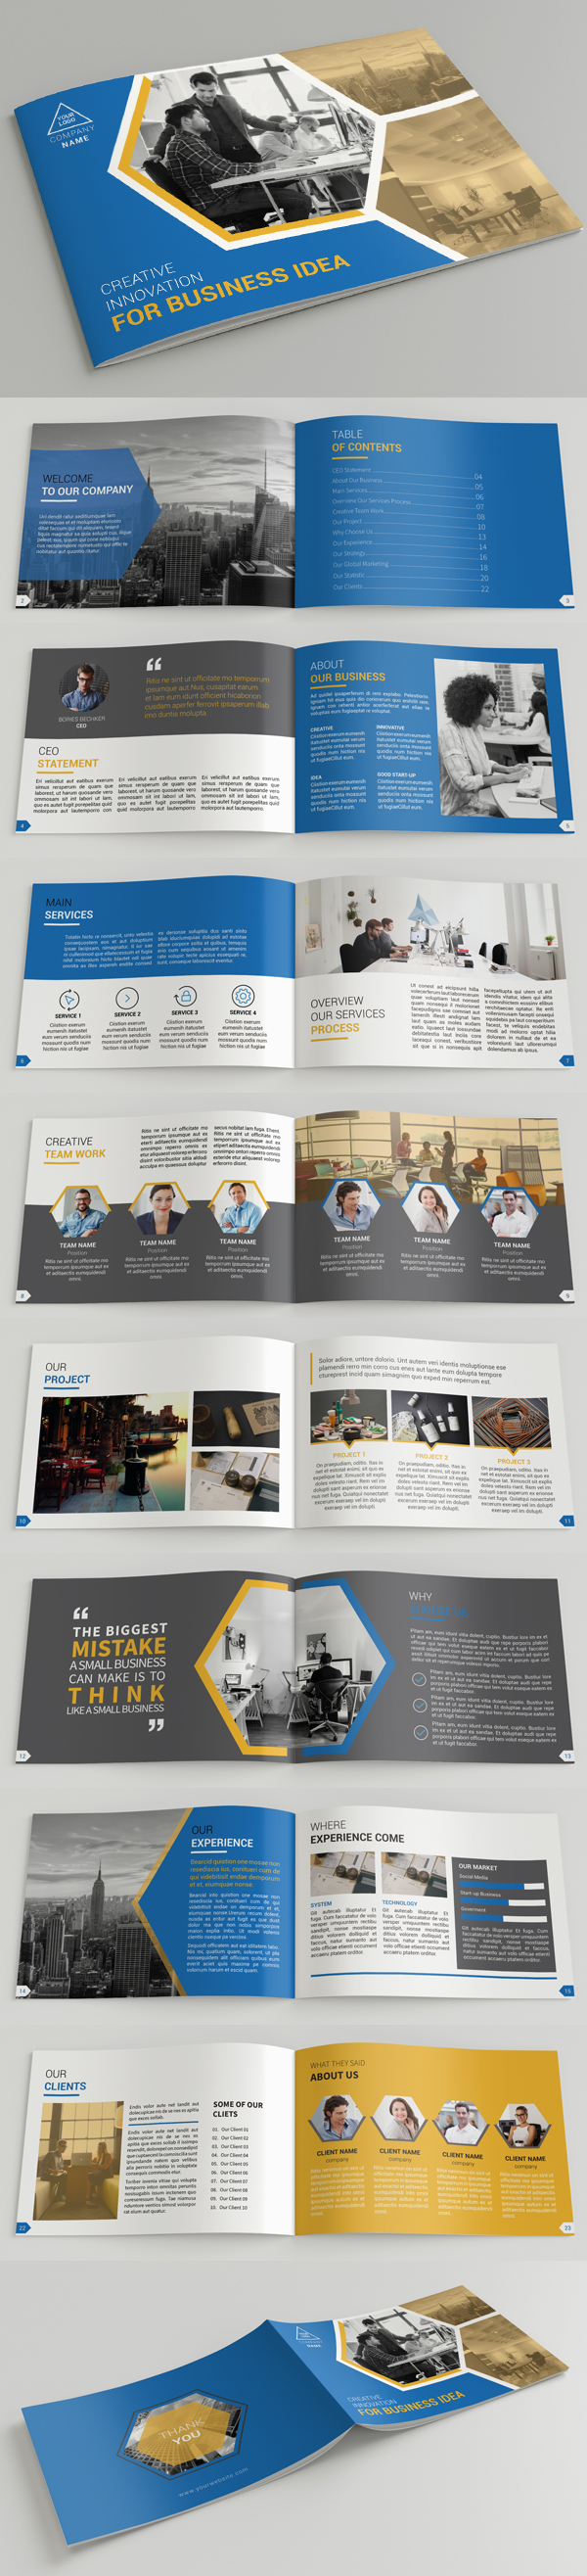 100 Professional Corporate Brochure Templates - 8